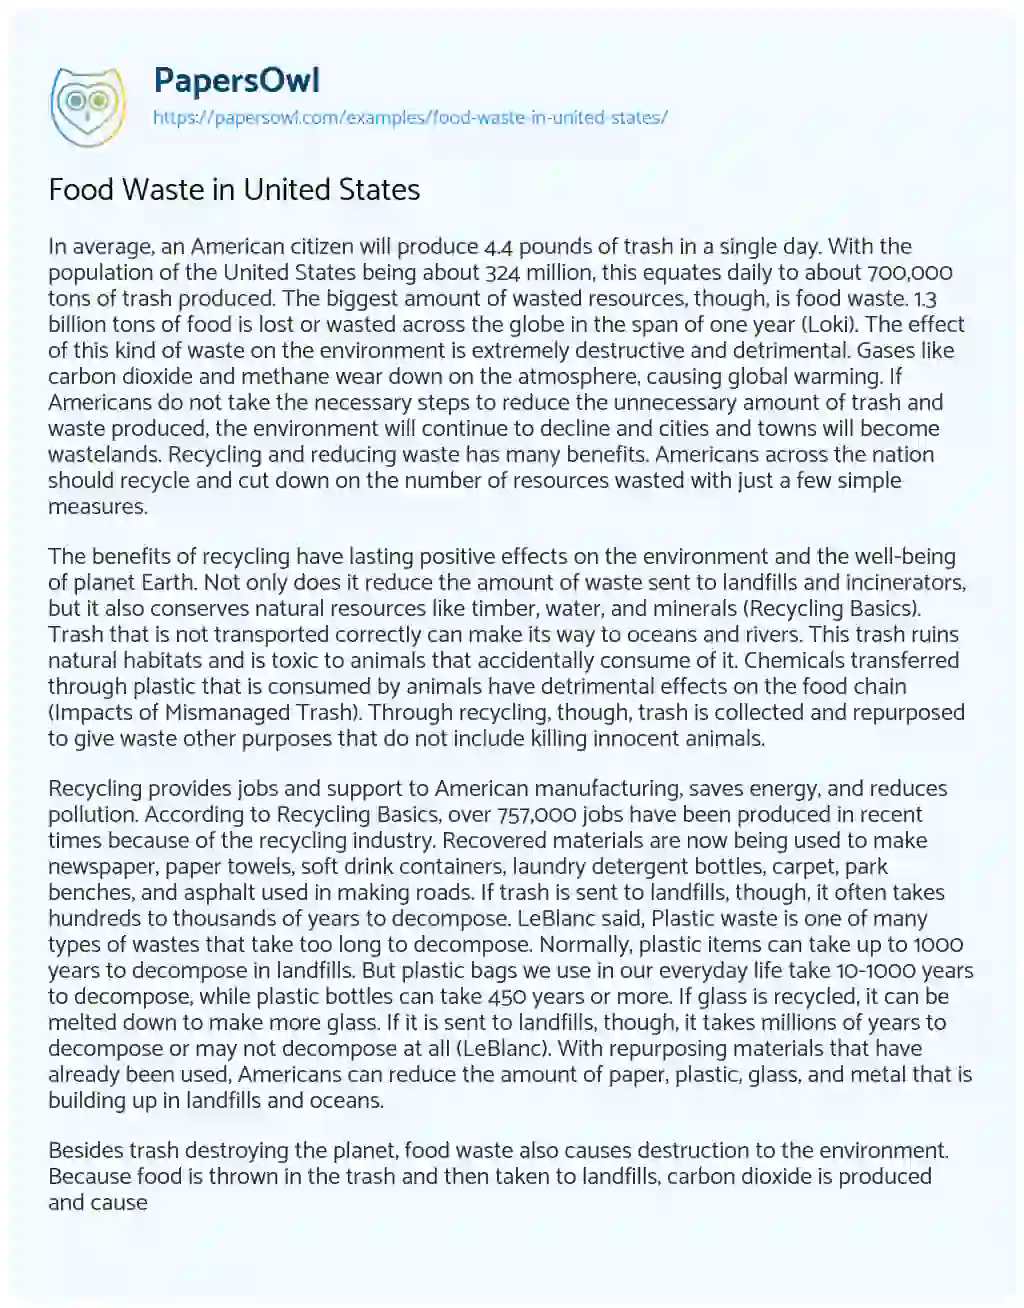 Essay on Food Waste in United States